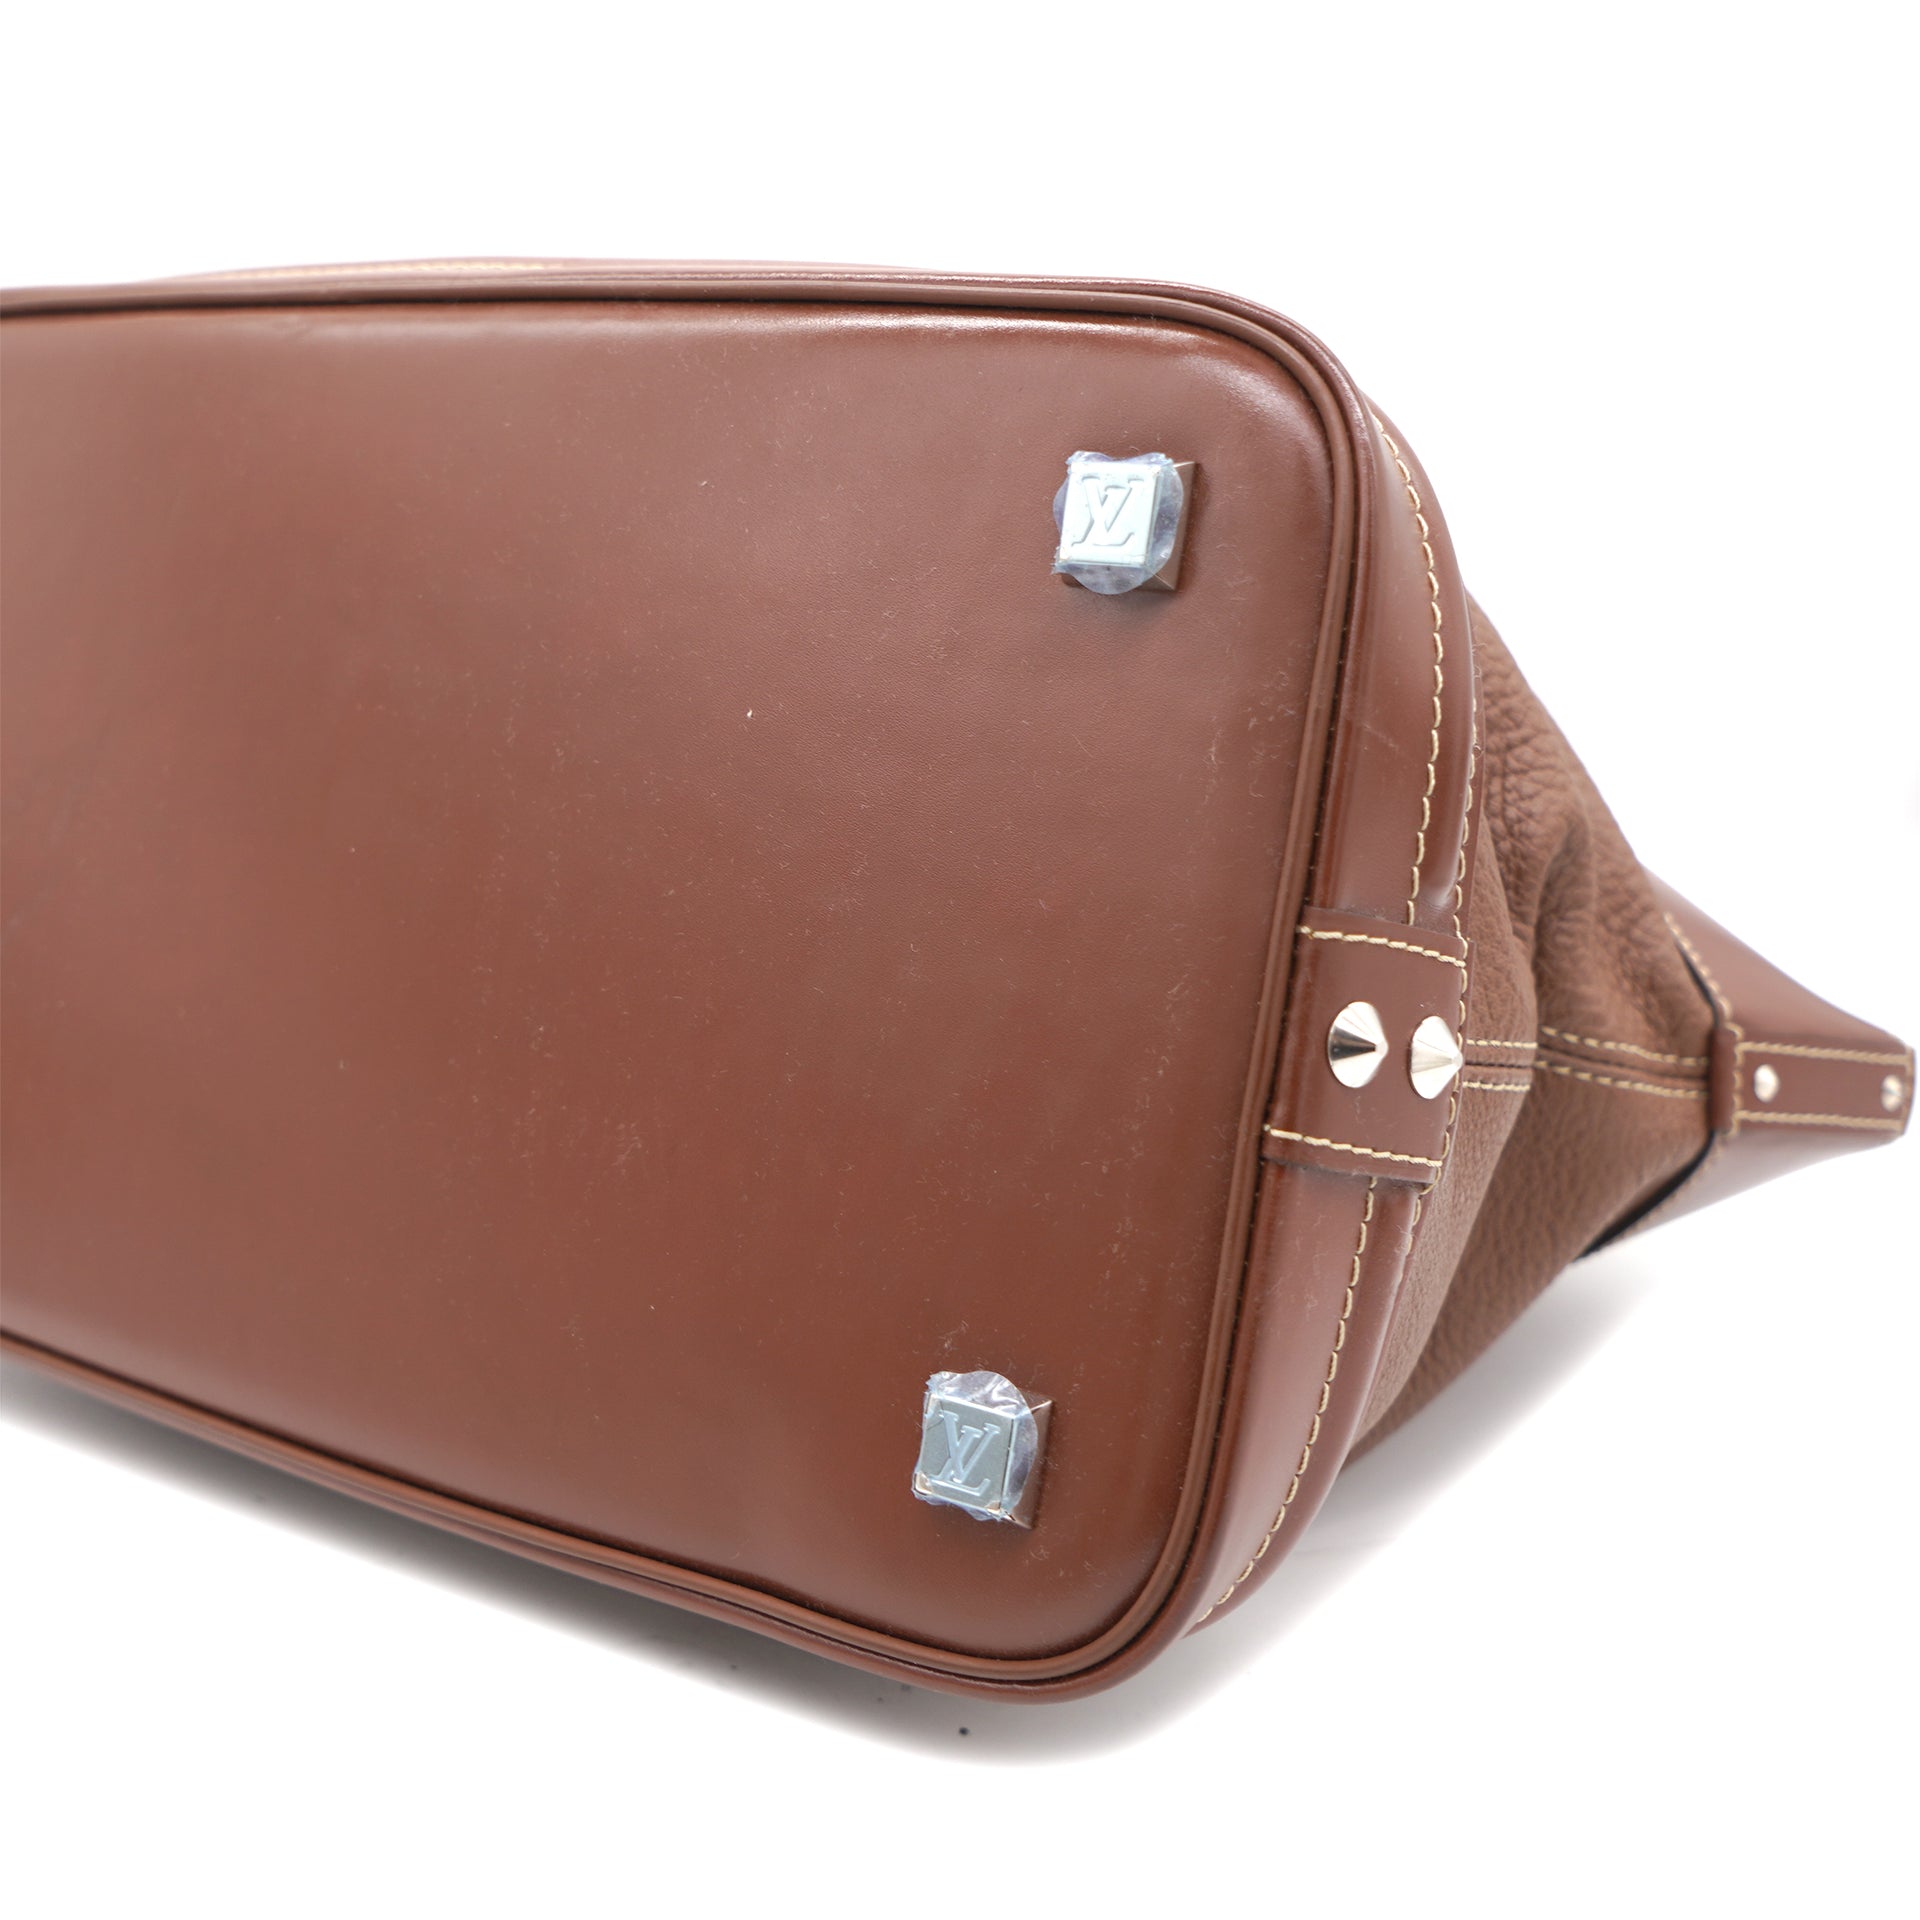 Brown Suhali Leather Lockit MM Bag